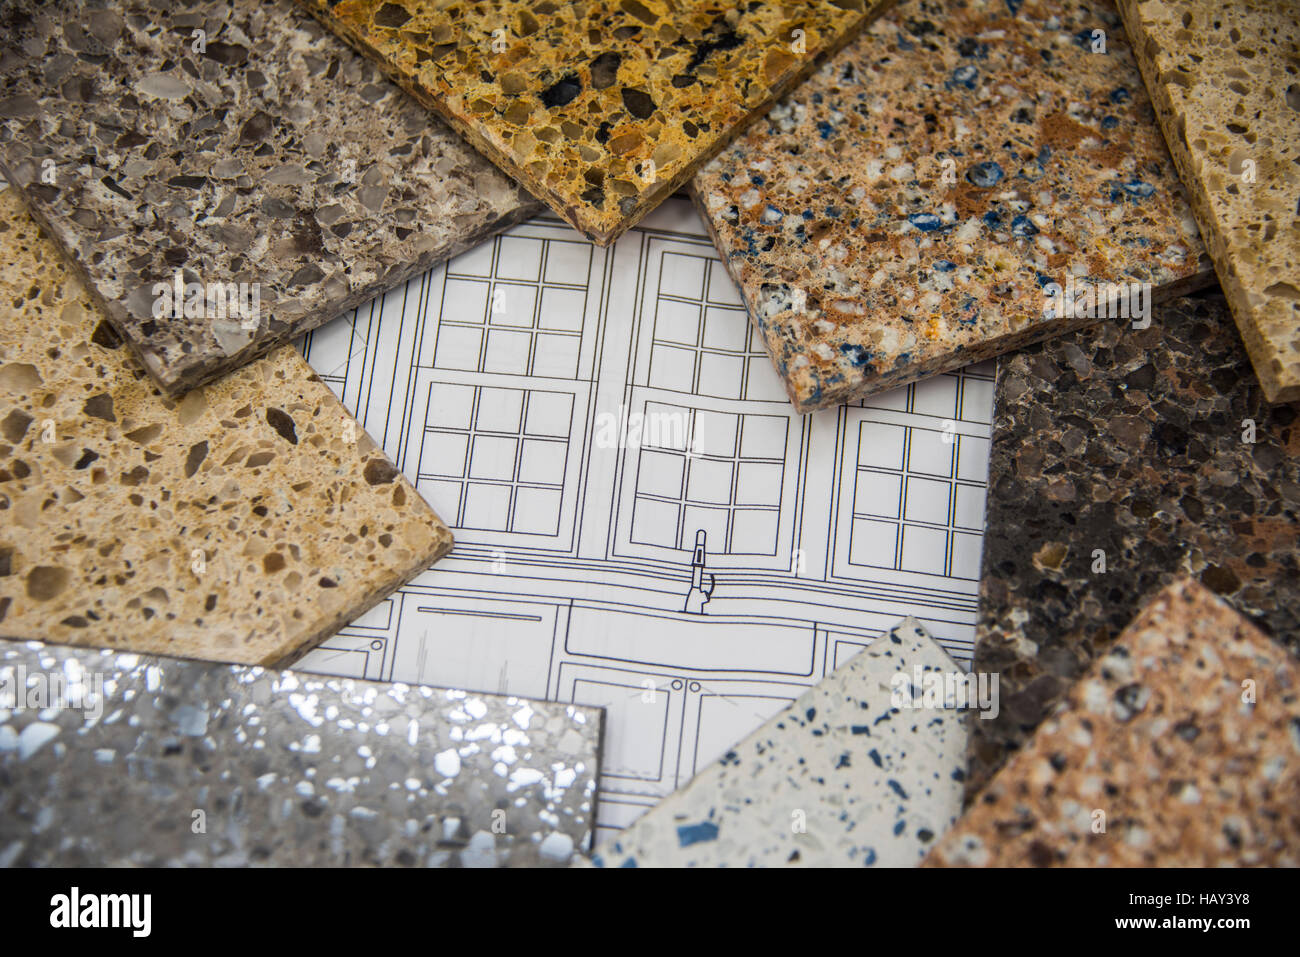 New Stone Samples Granite Counter Tops And Ceramic Tile Floor